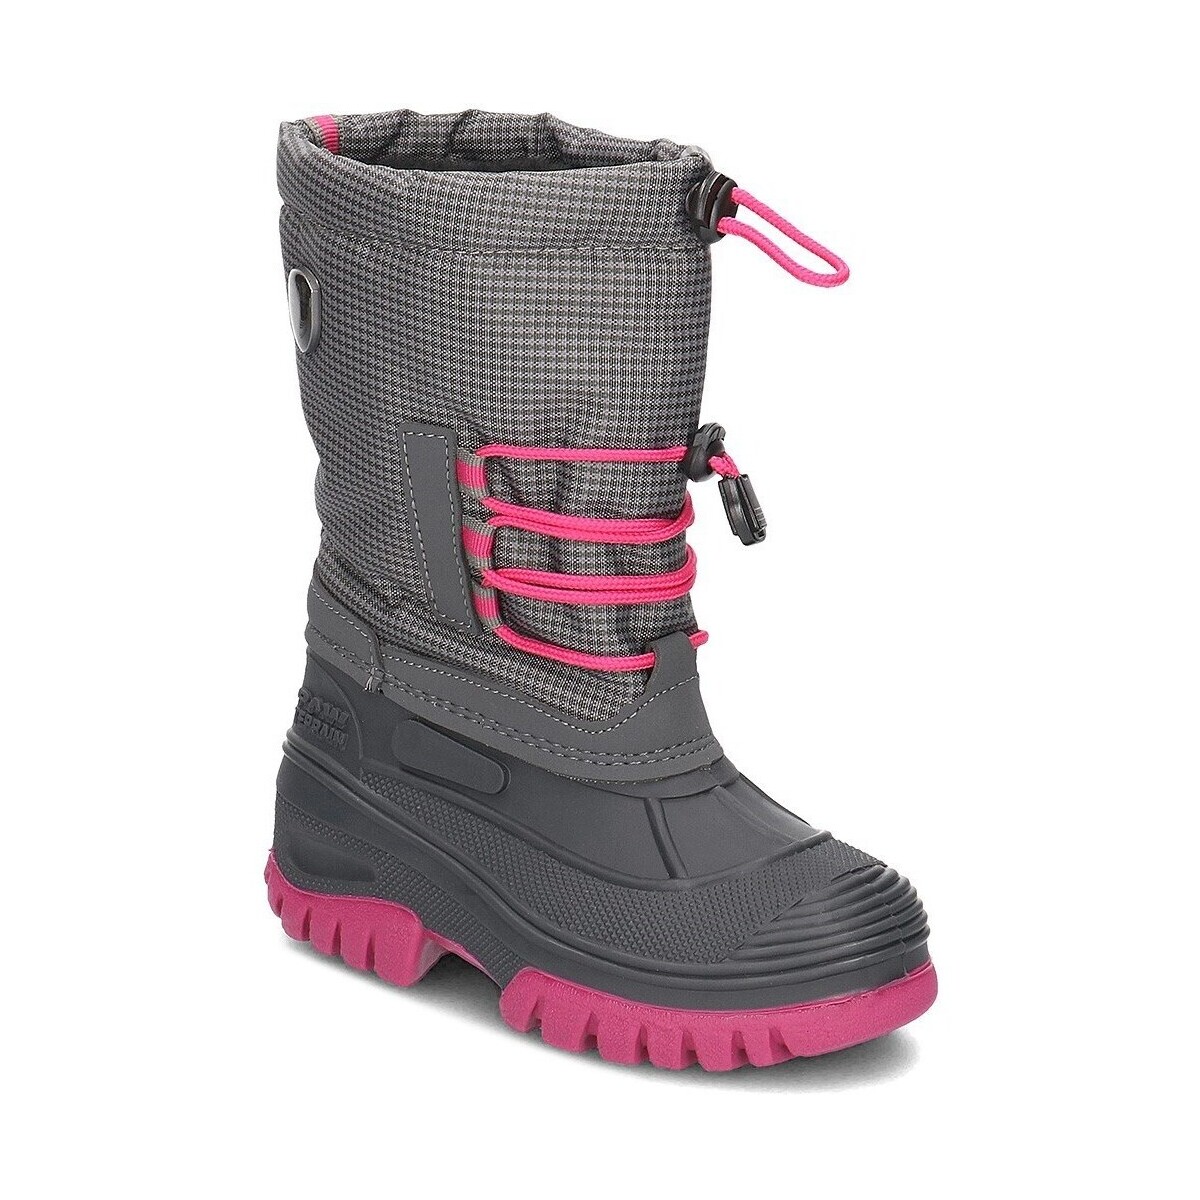 Shoes Children Snow boots Cmp Ahto WP Pink, Grey, Graphite